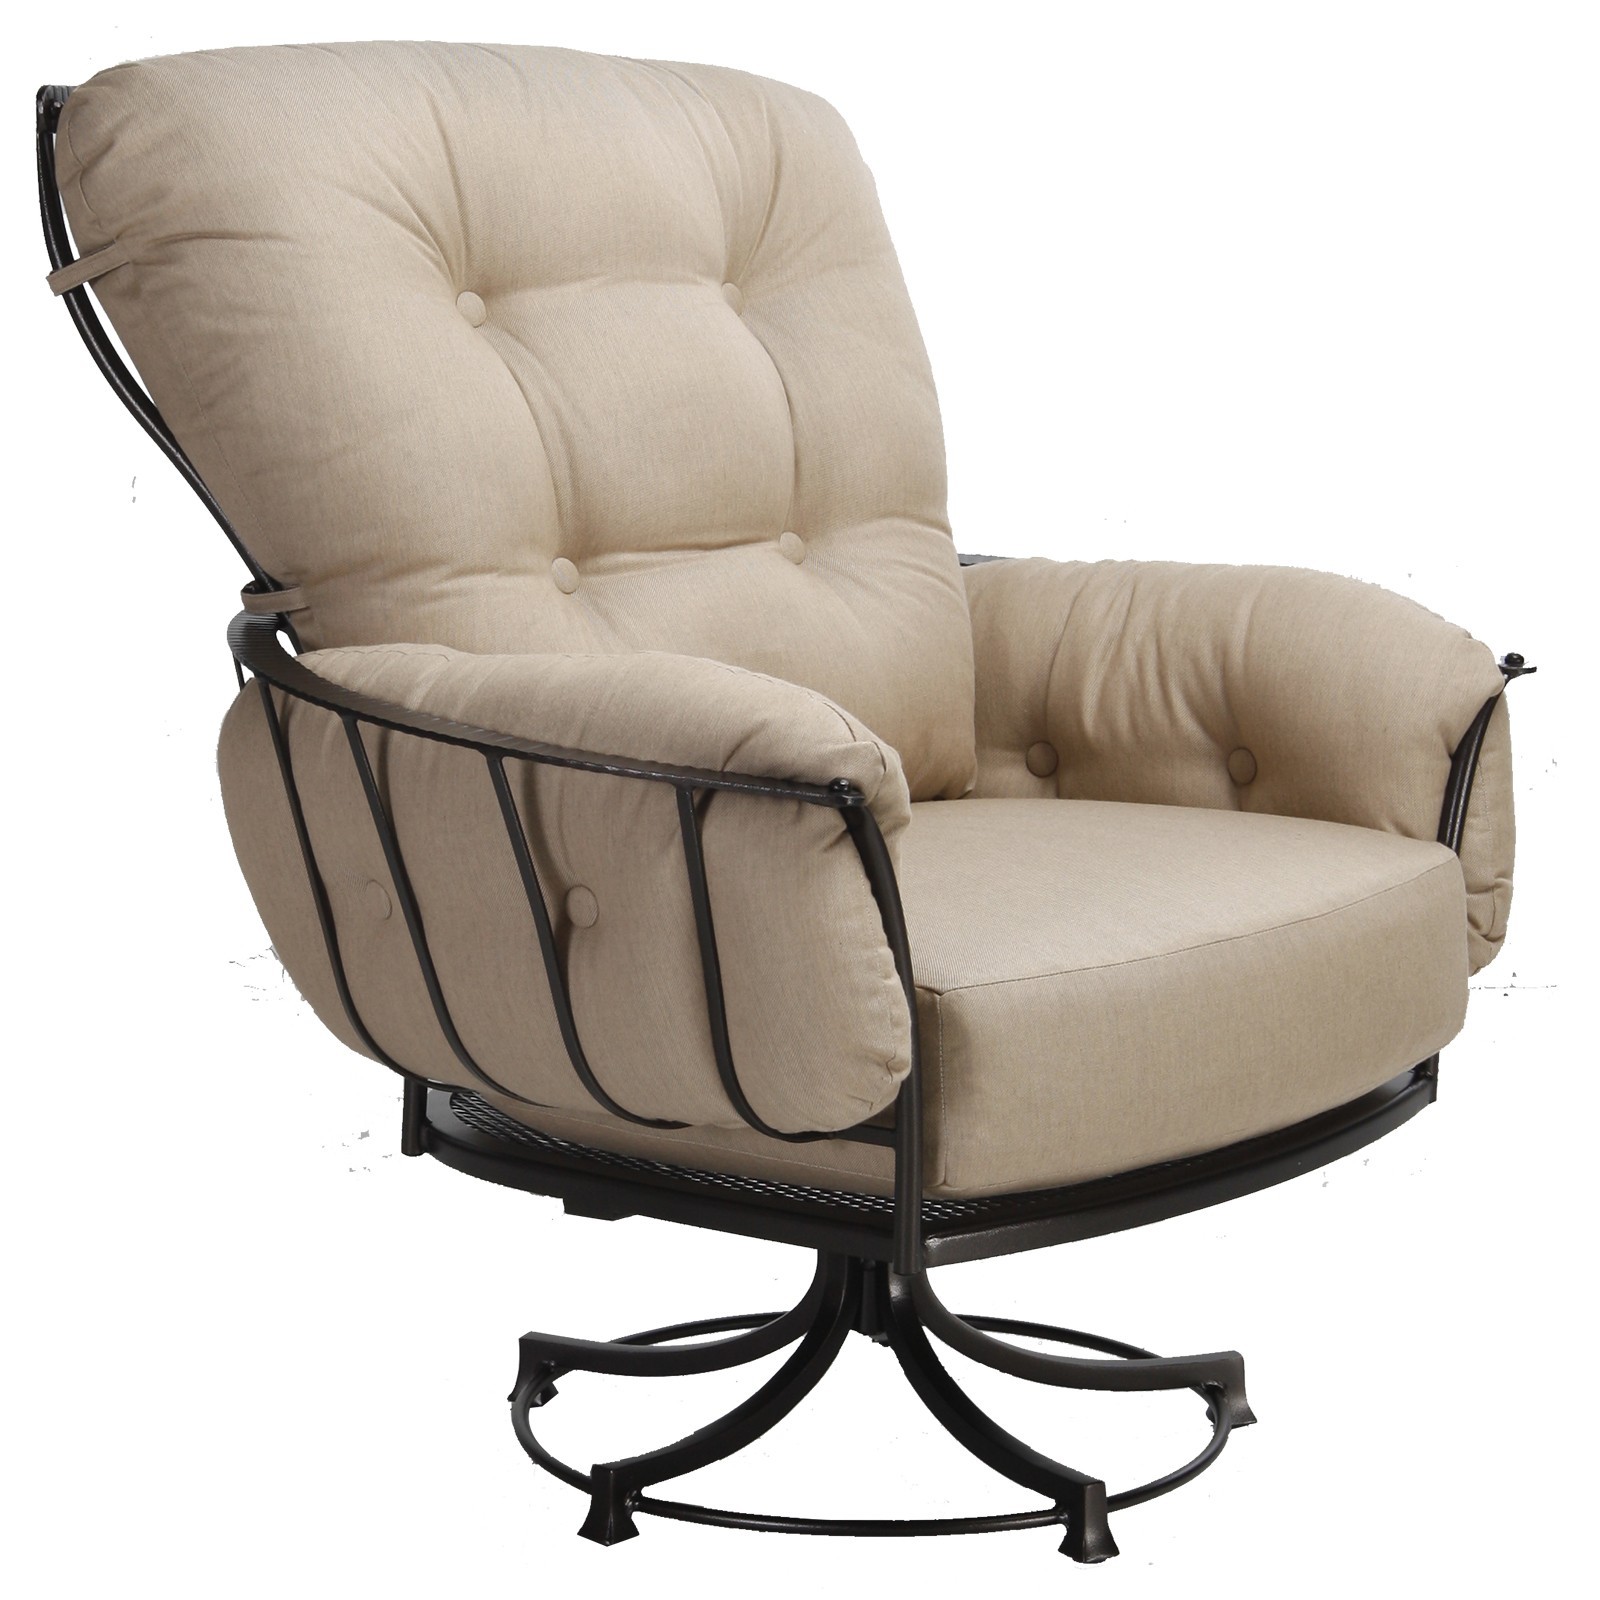 Monterra swivel rocker lounge chair luxury outdoor living by hausers patio